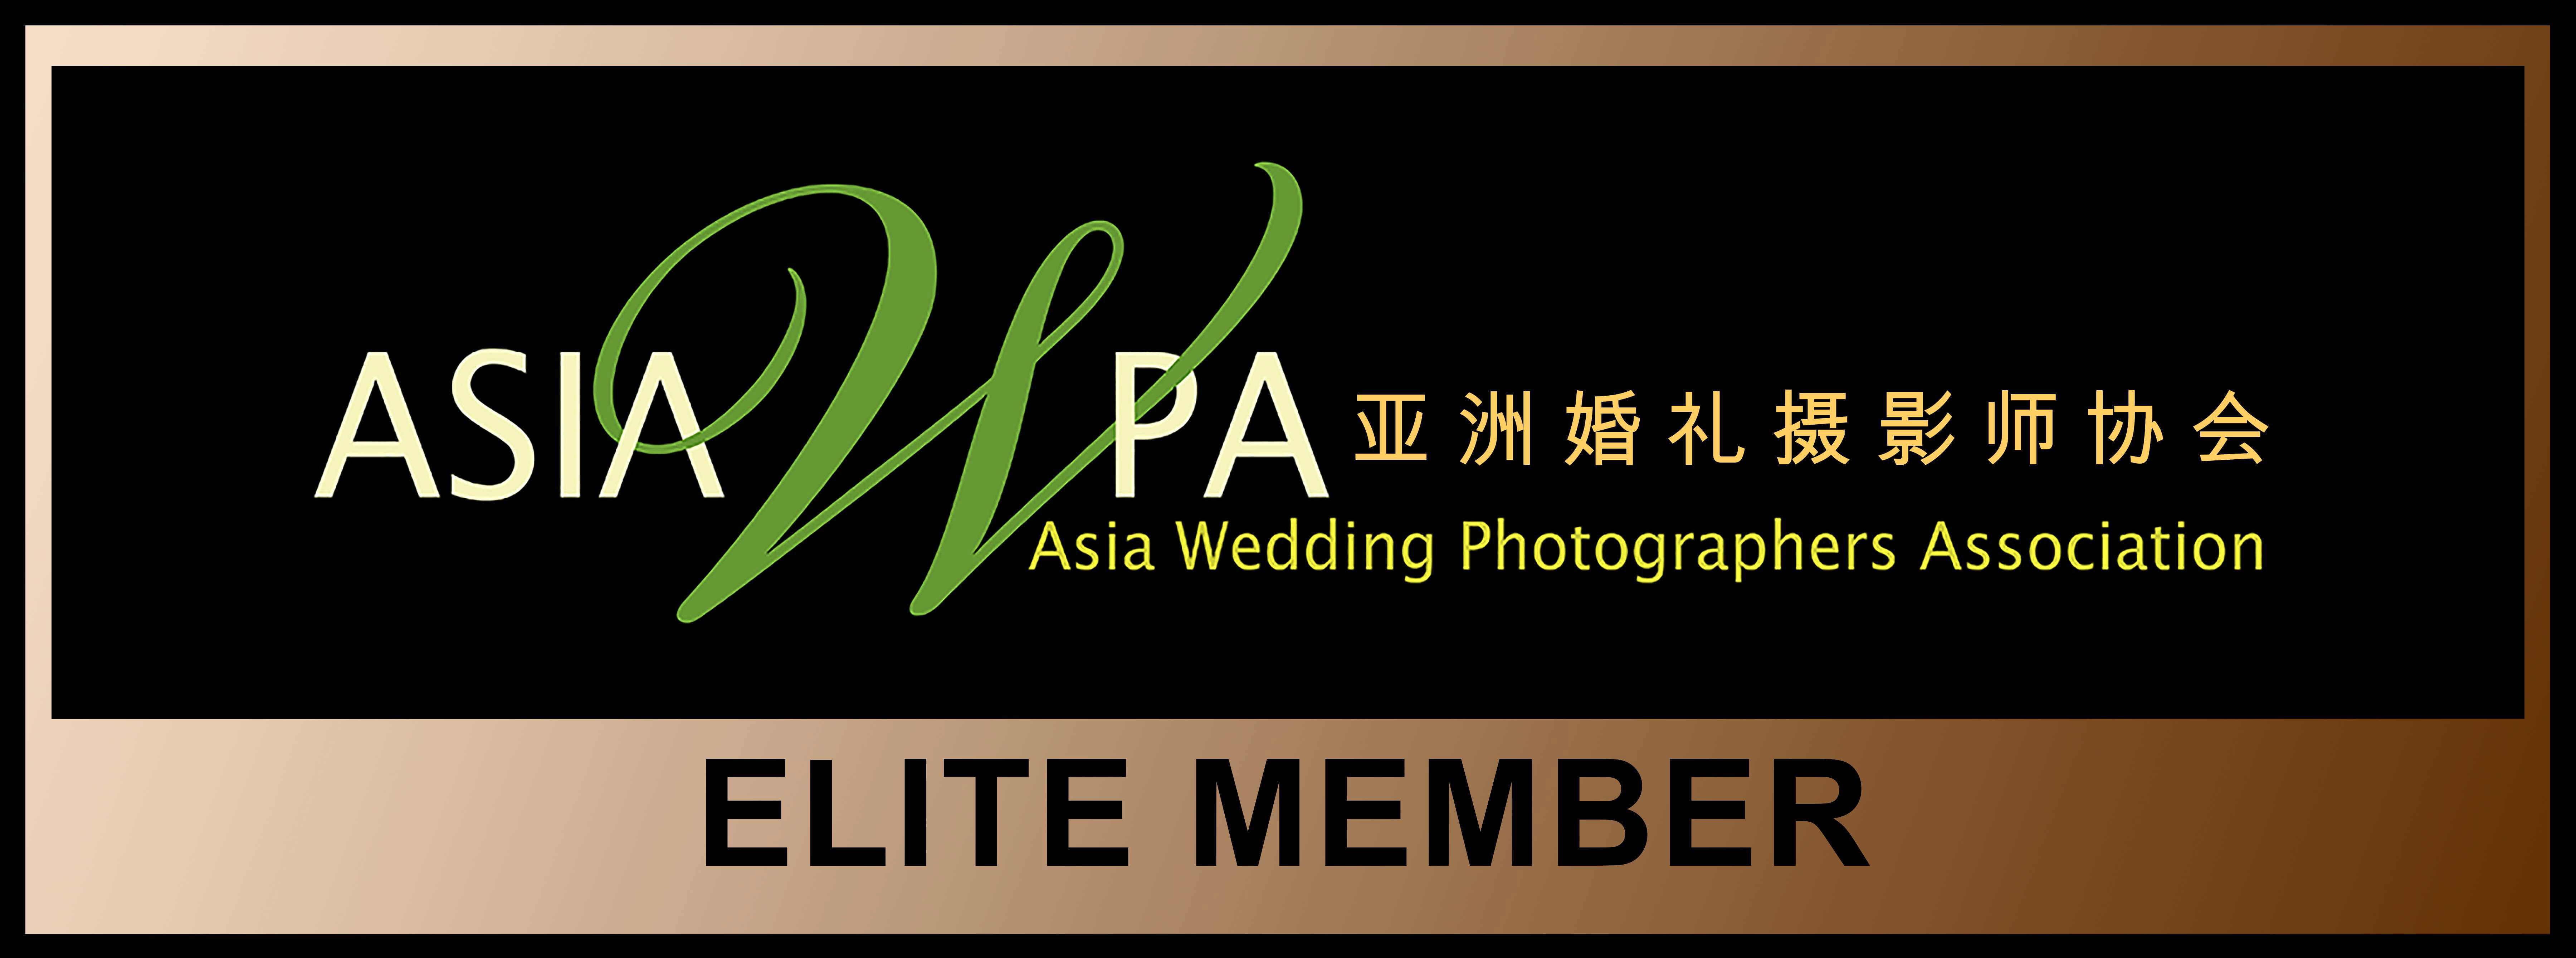 Asia-WPA―――Asia-Wedding Photographers Association